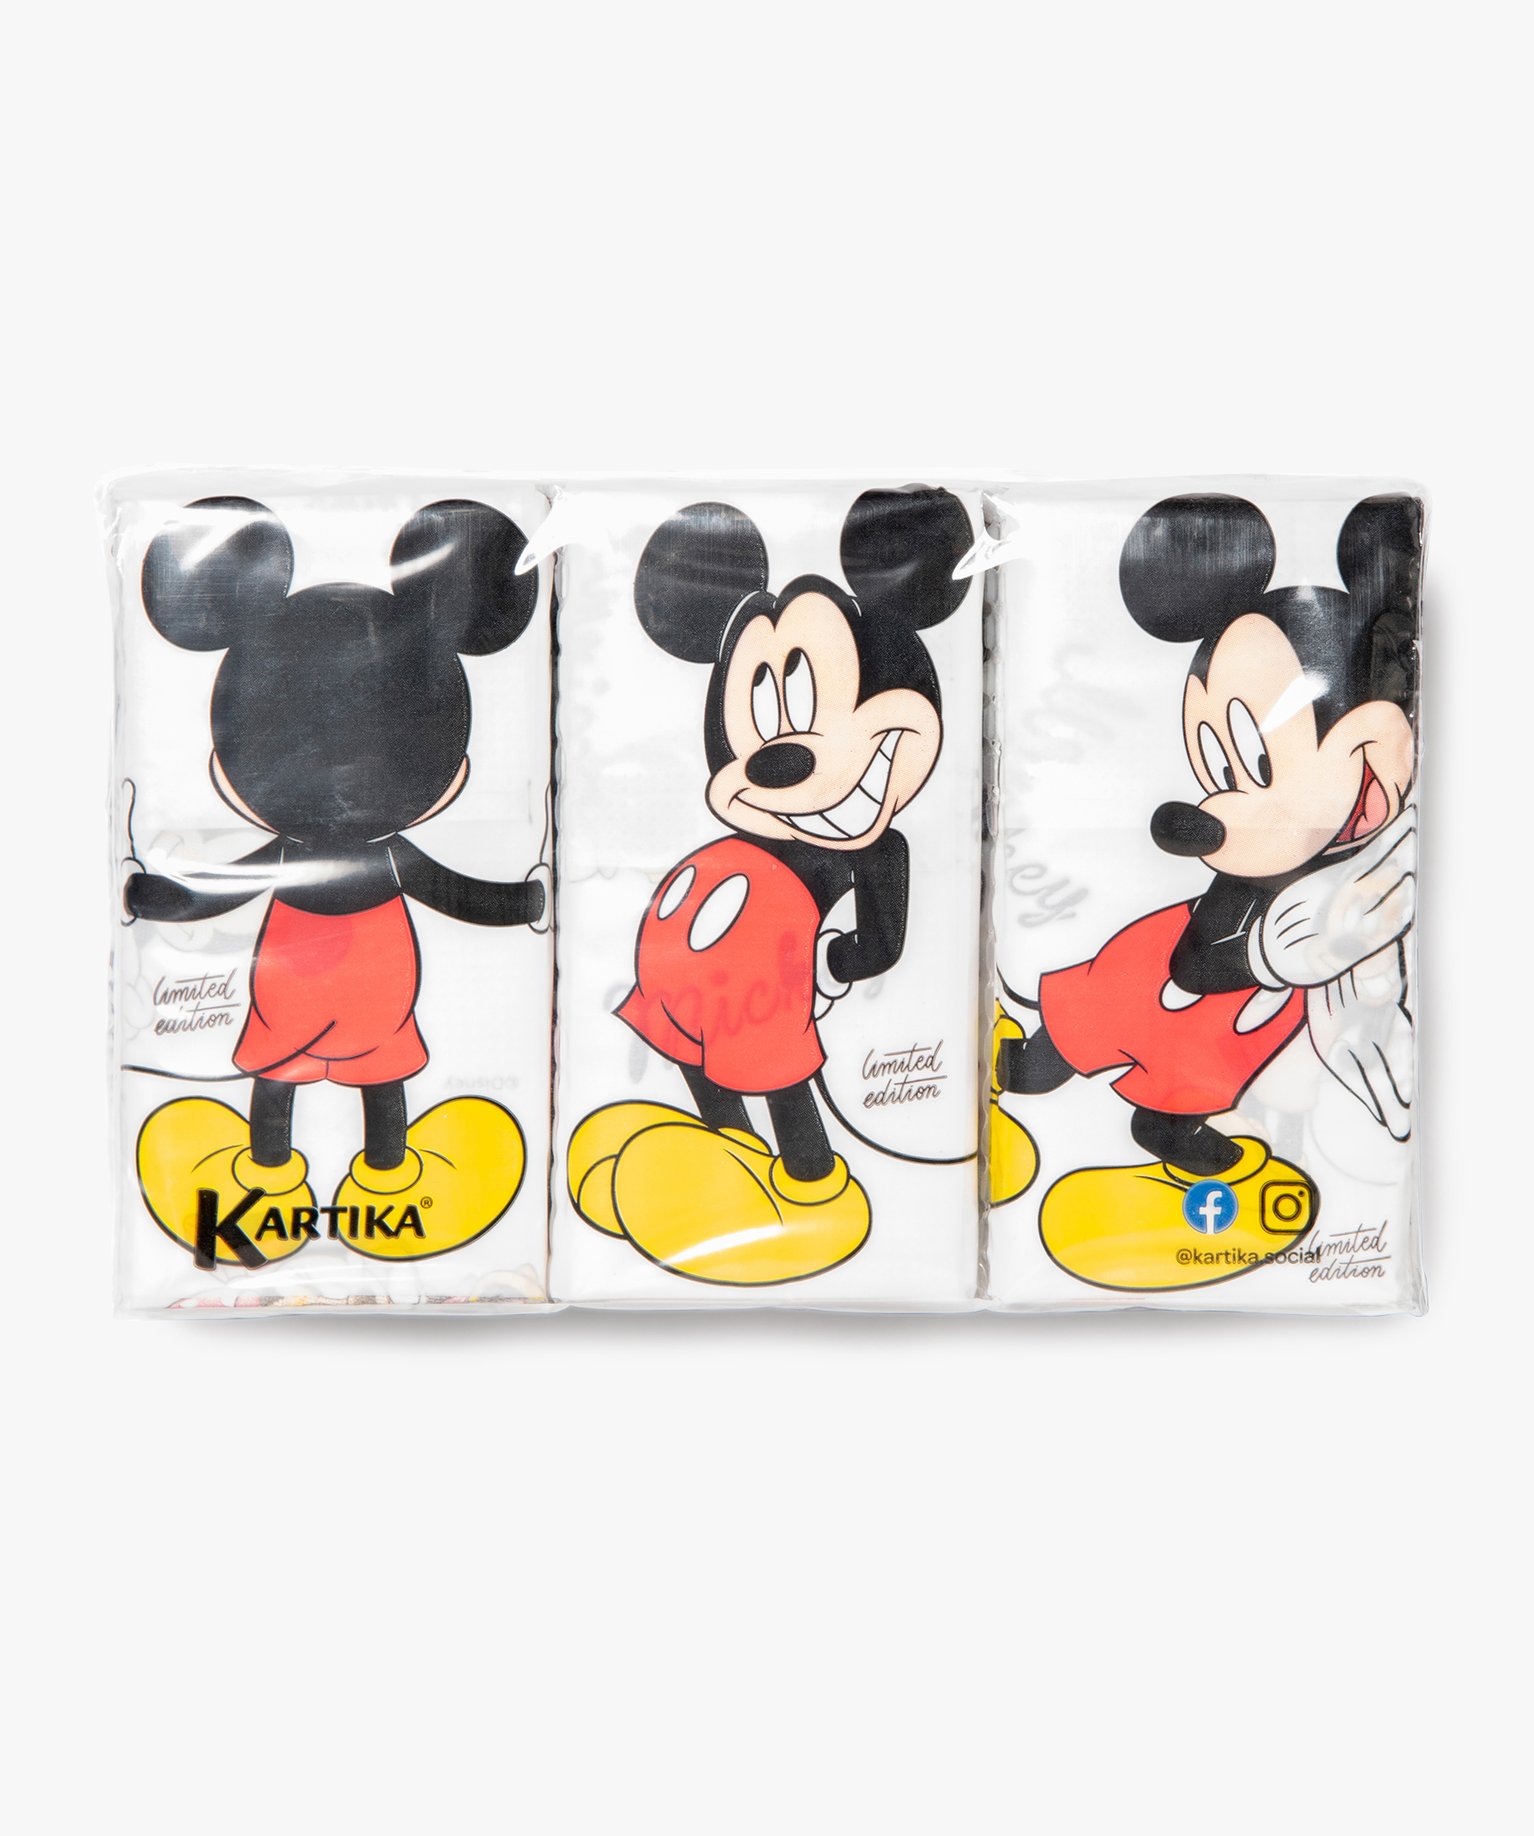 Mouchoirs jetables (lot de 6) - Mickey